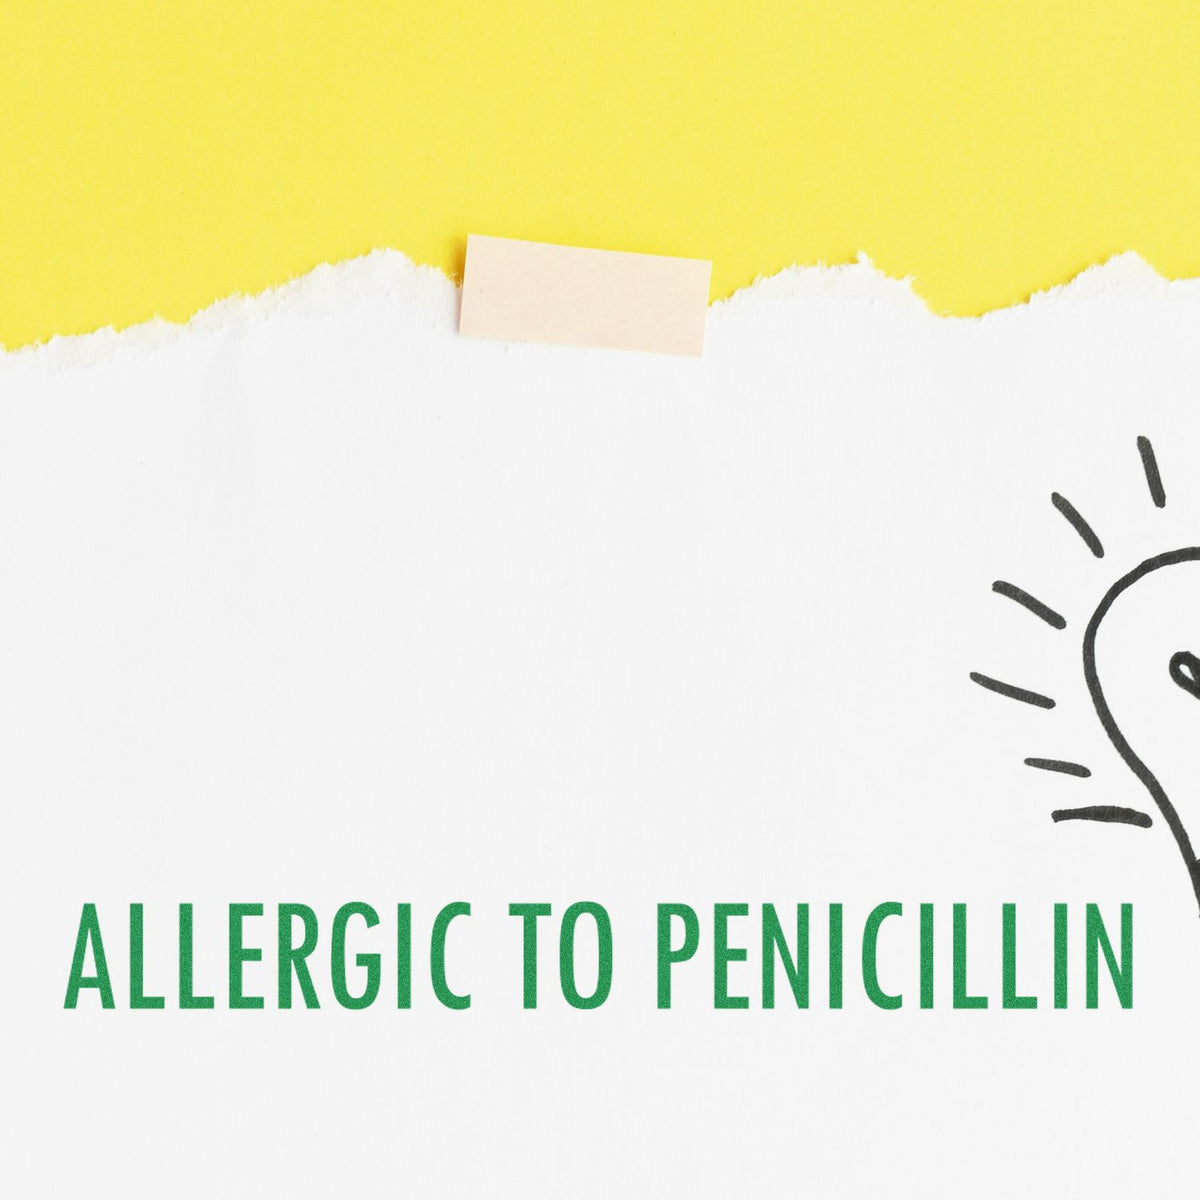 Allergic To Penicillin Rubber Stamp In Use